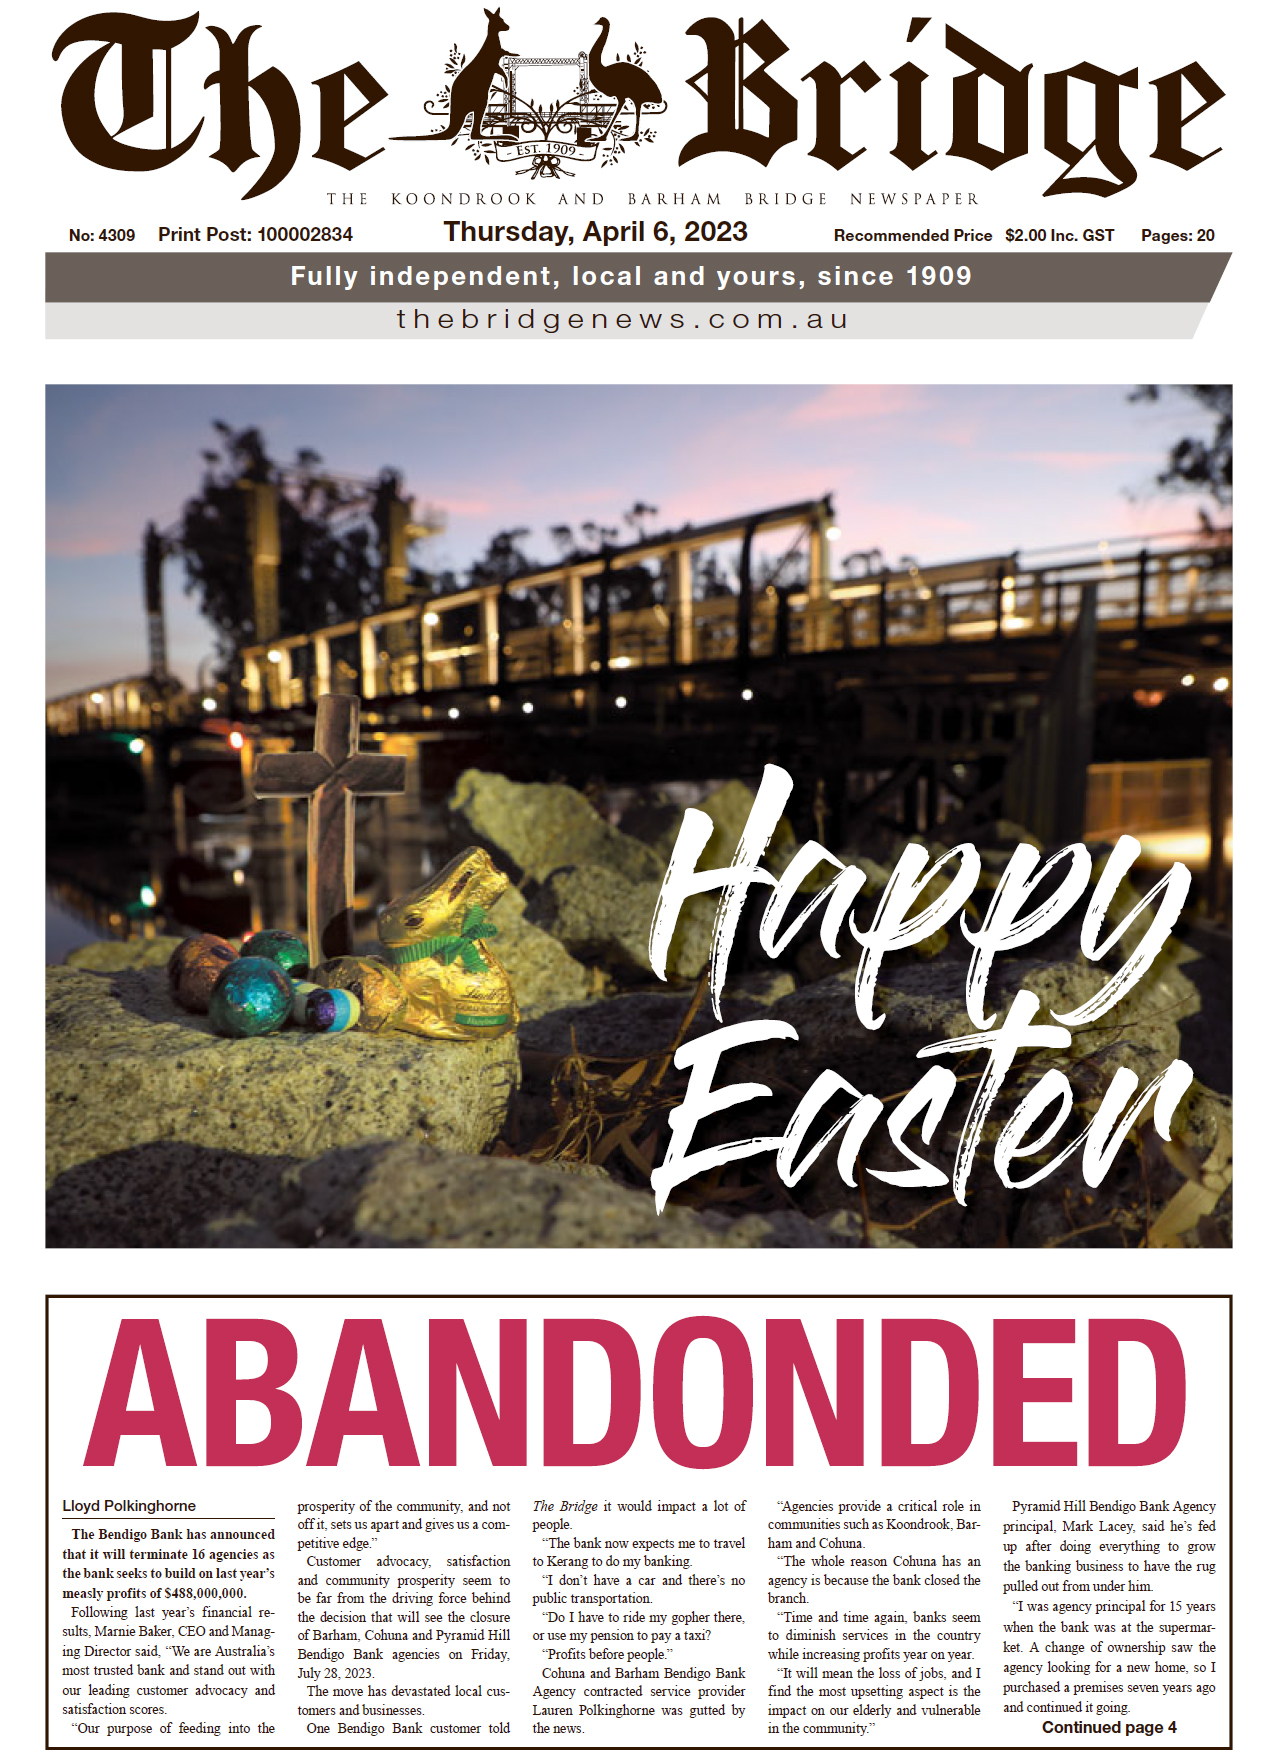 The Koondrook and Barham Bridge Newspaper, 6 April 2023